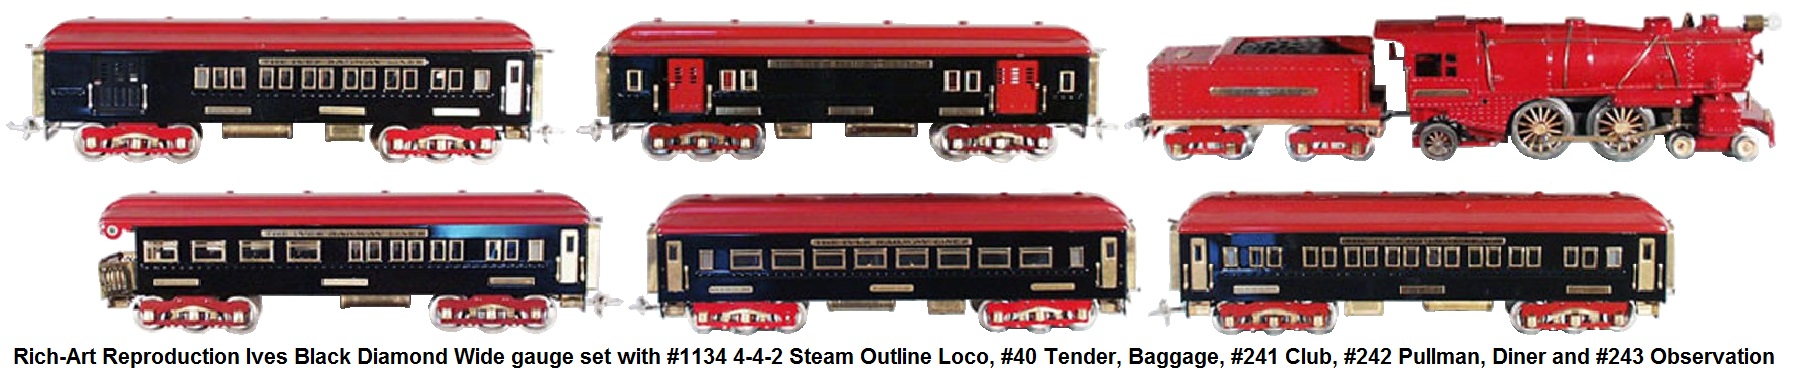 Rich-Art Wide gauge Reproduction Ives #1134 4-4-2 Steam outline Locomotive, #40 tender, baggage, #241 Club, #242 parlor, Diner, and #243 Observation cars